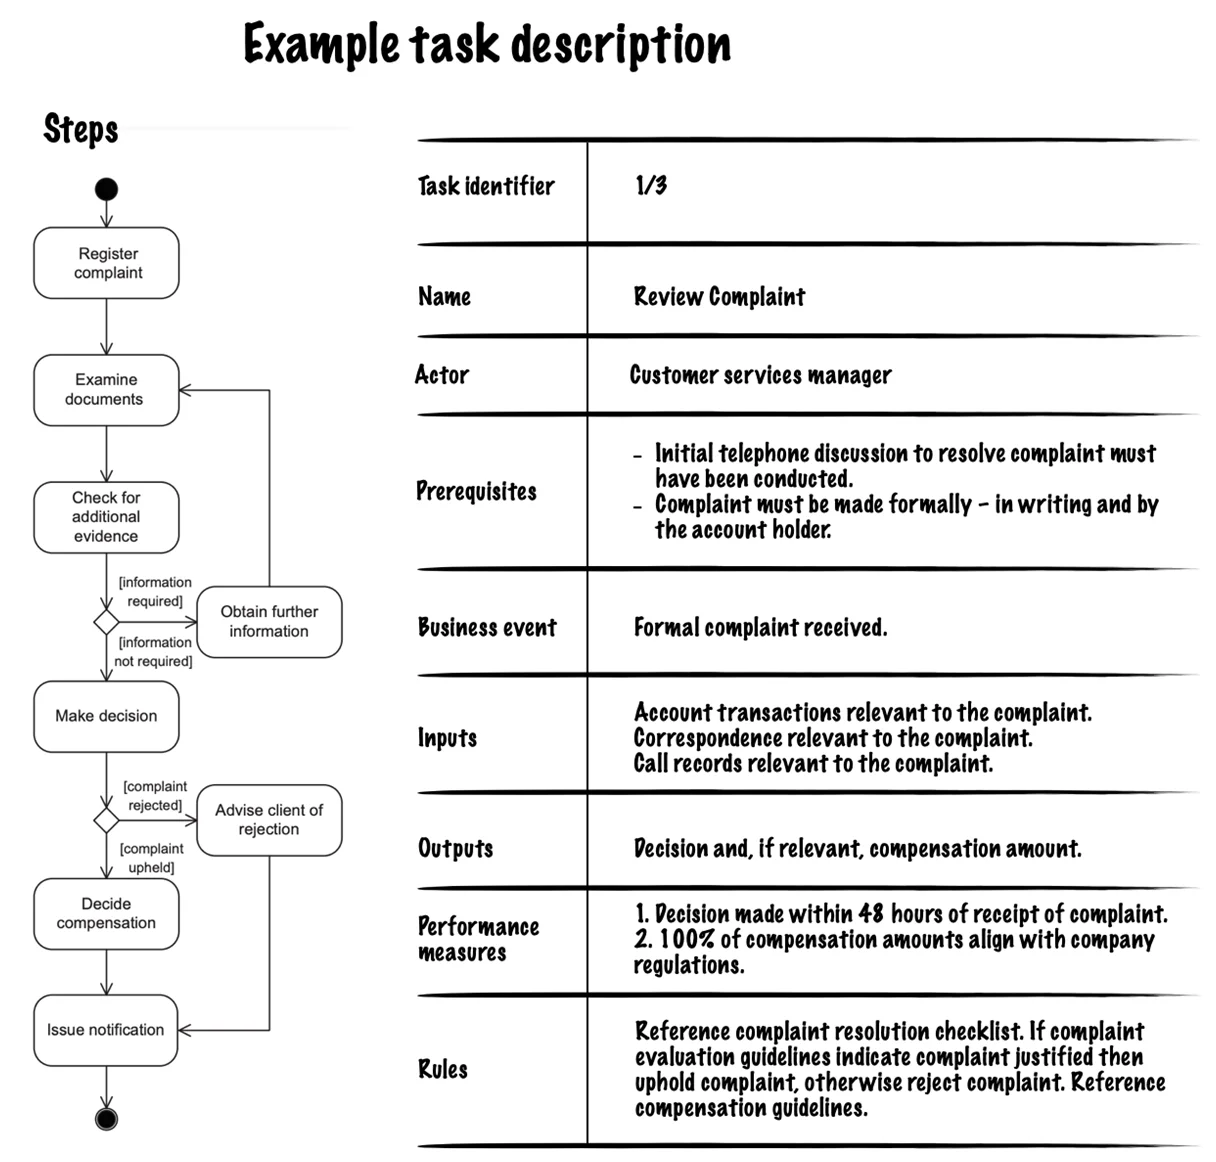 Example task description